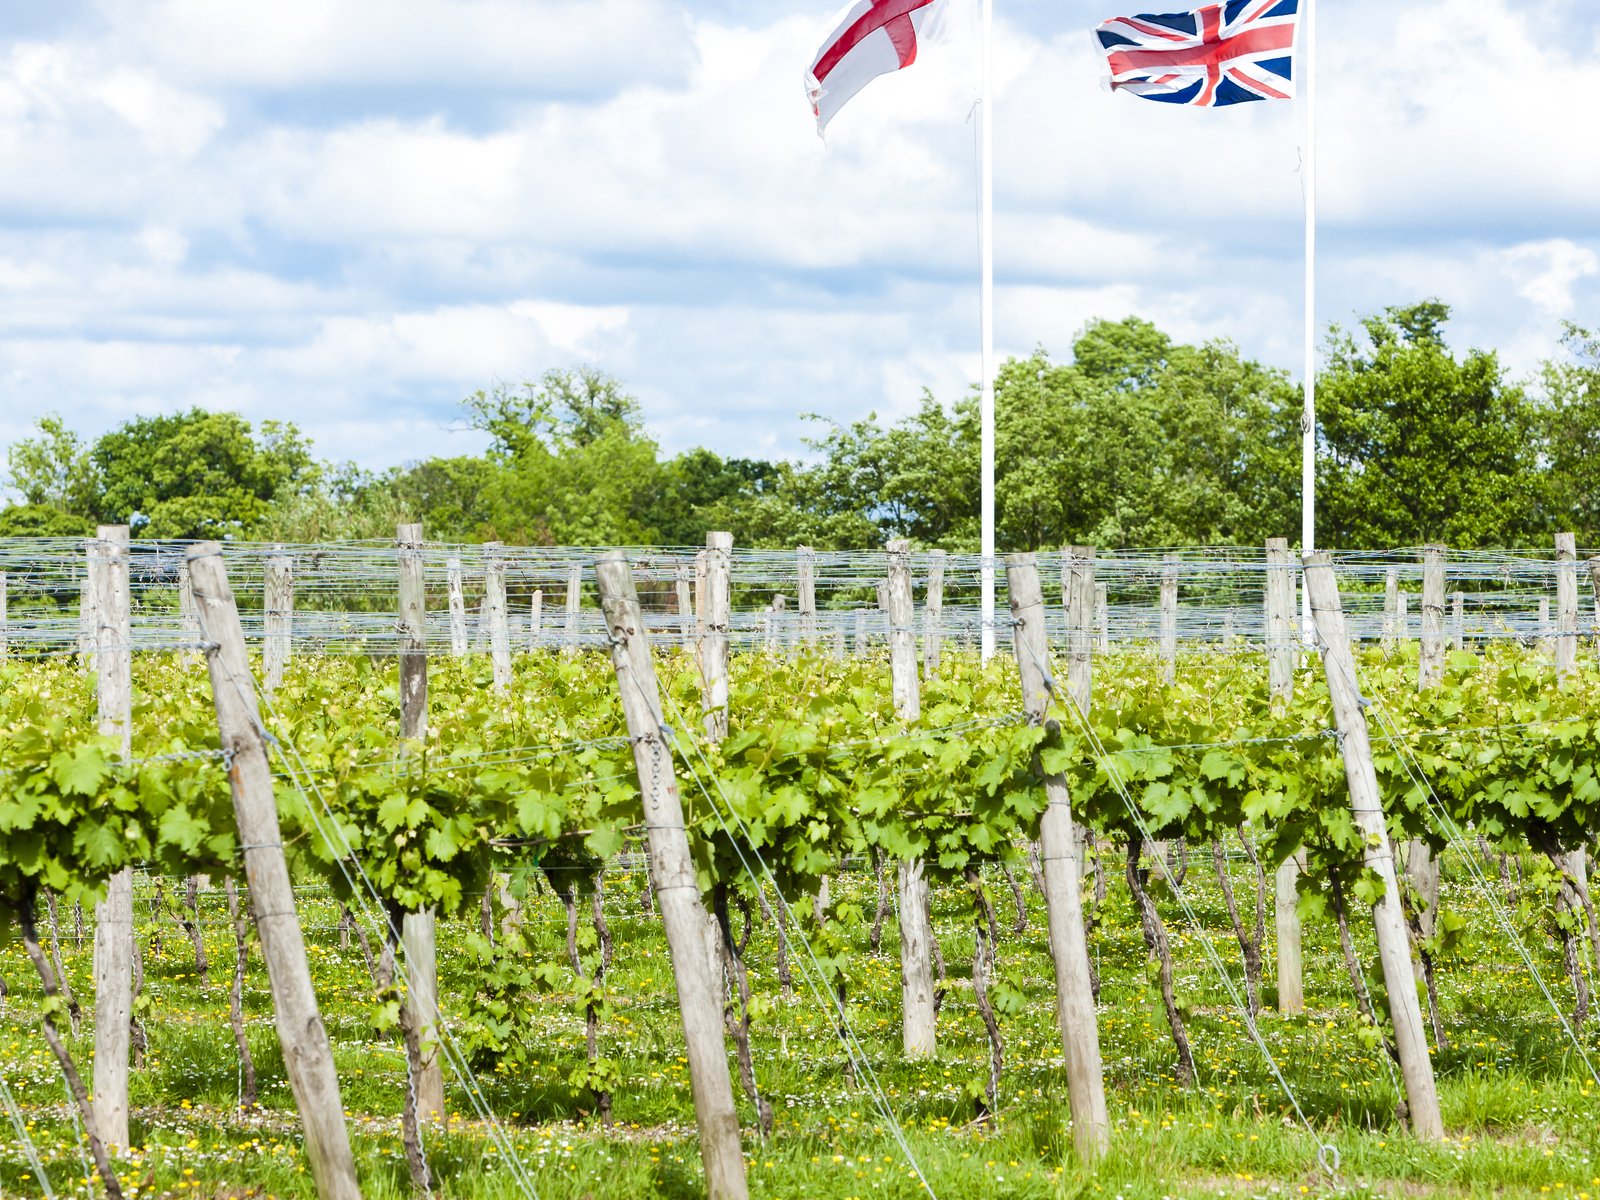 Twenty three UK vineyards have now achieved sustainable certification.